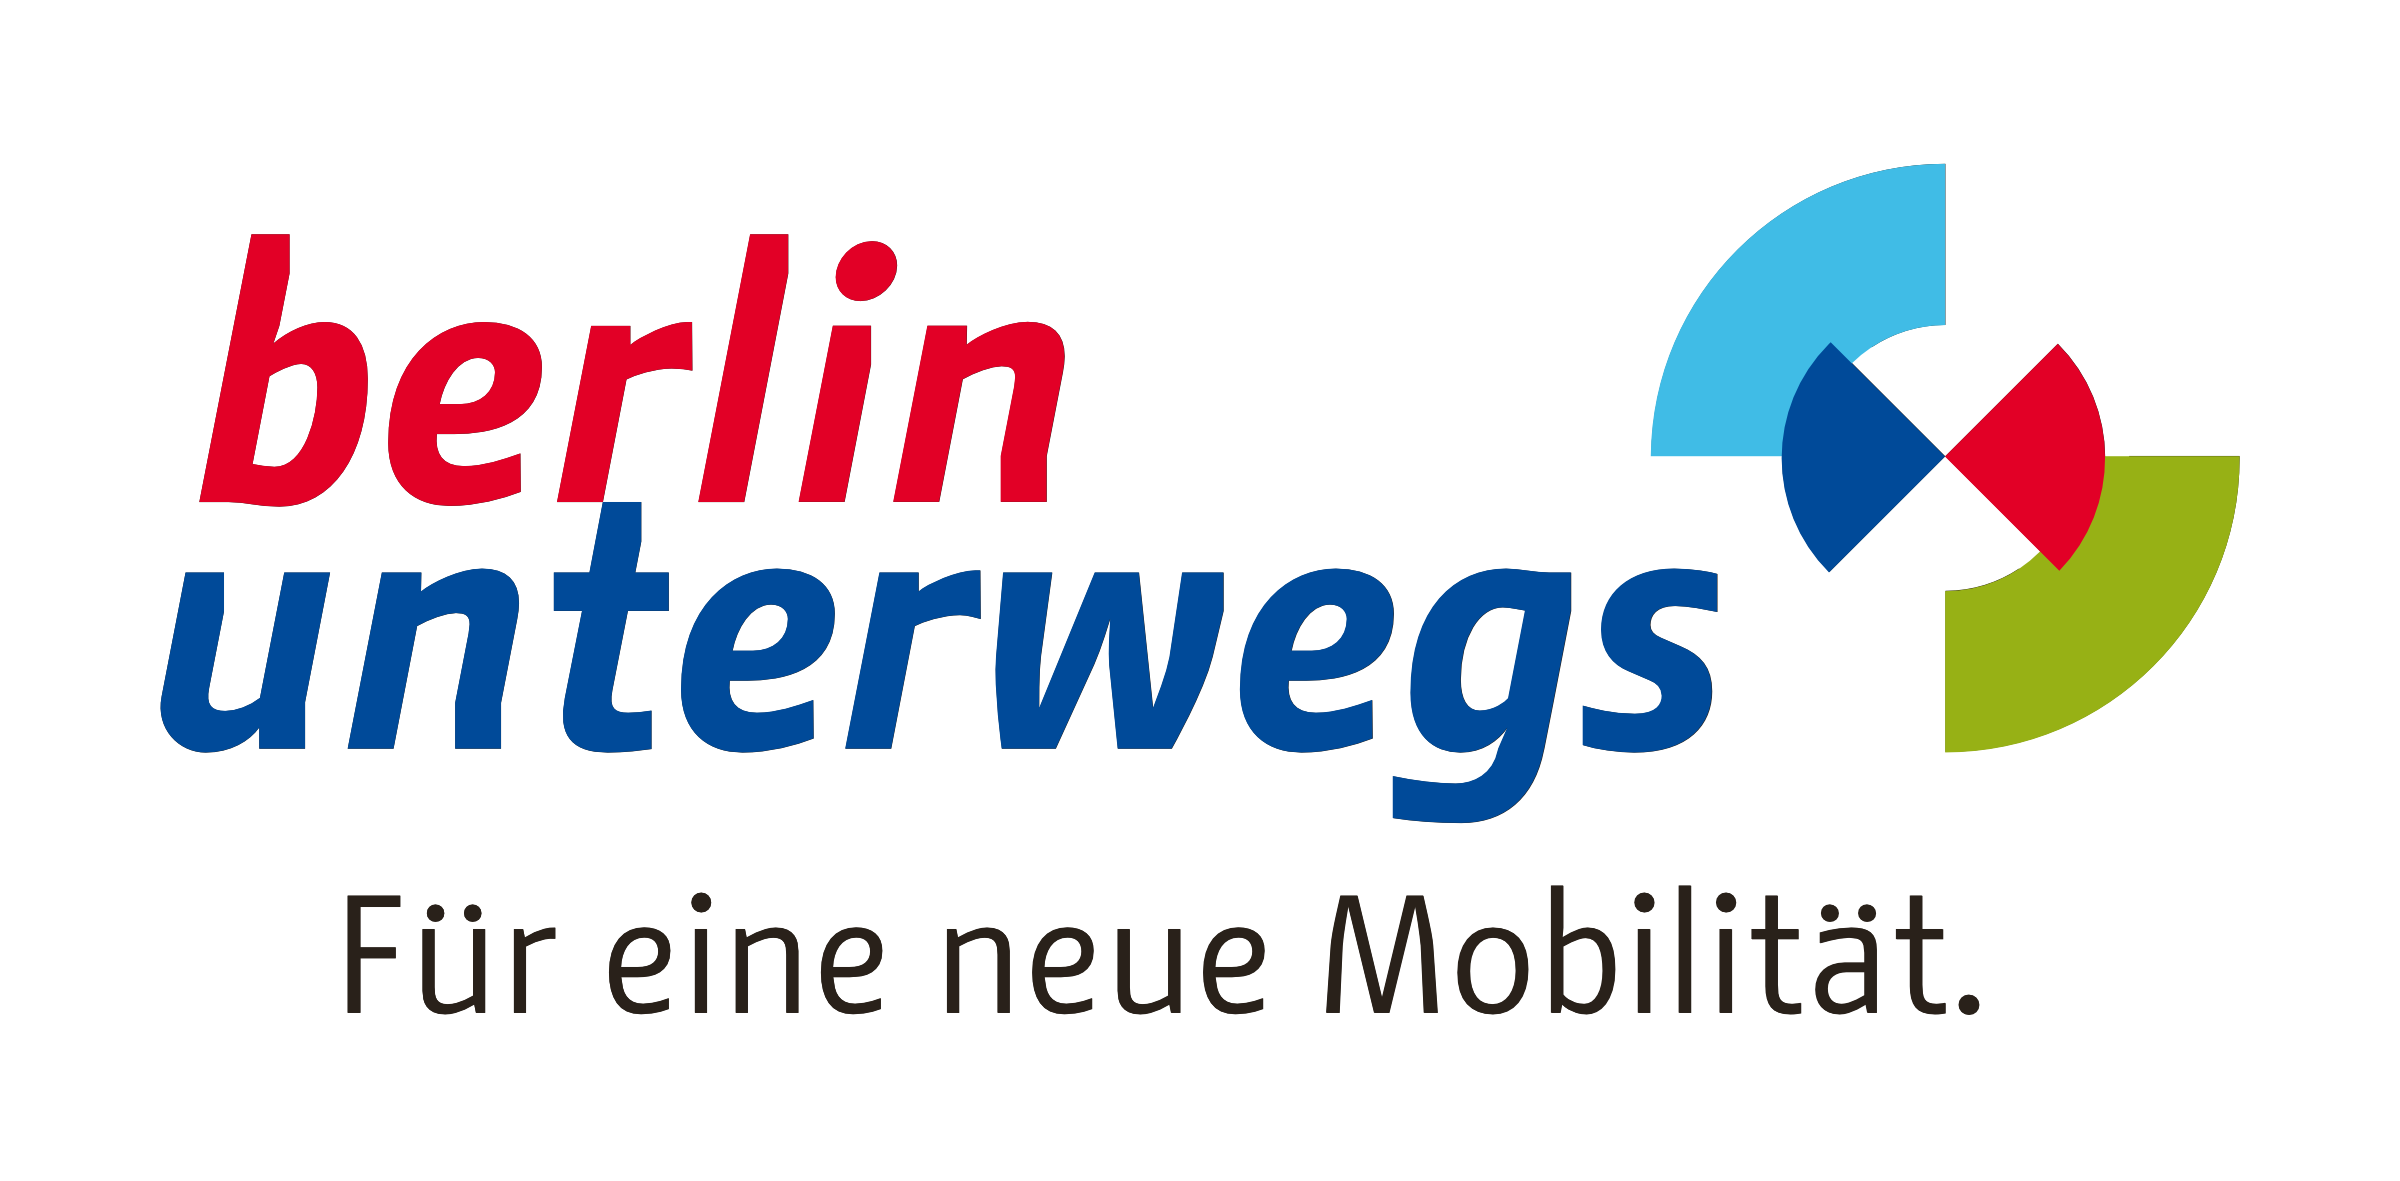 Change in use as Berlin’s corporate typeface - Logo berlin unterwegs campaign